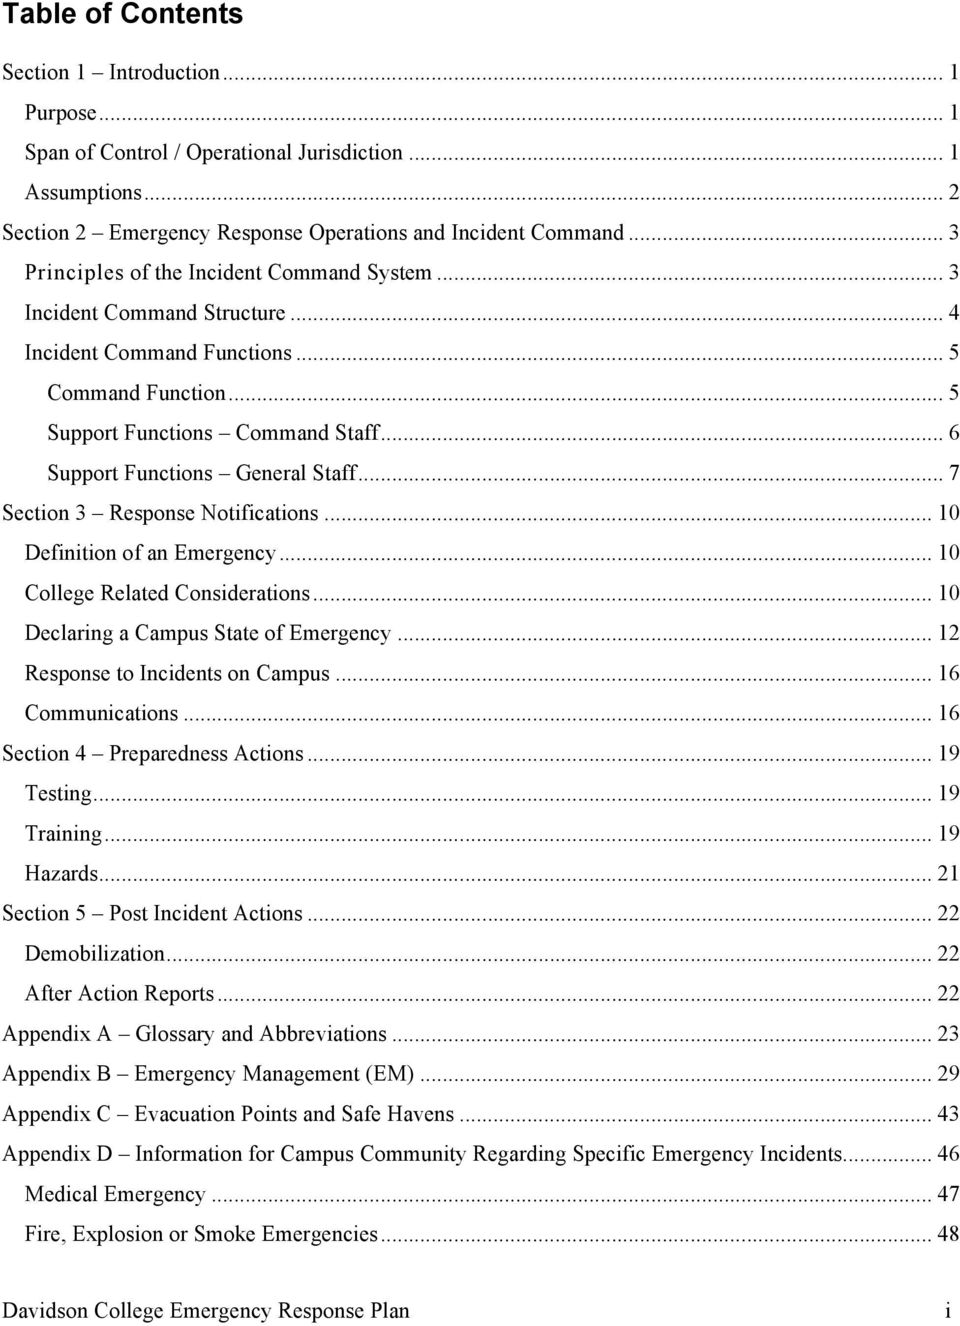 Davidson College Emergency Response Plan Pdf Free Download